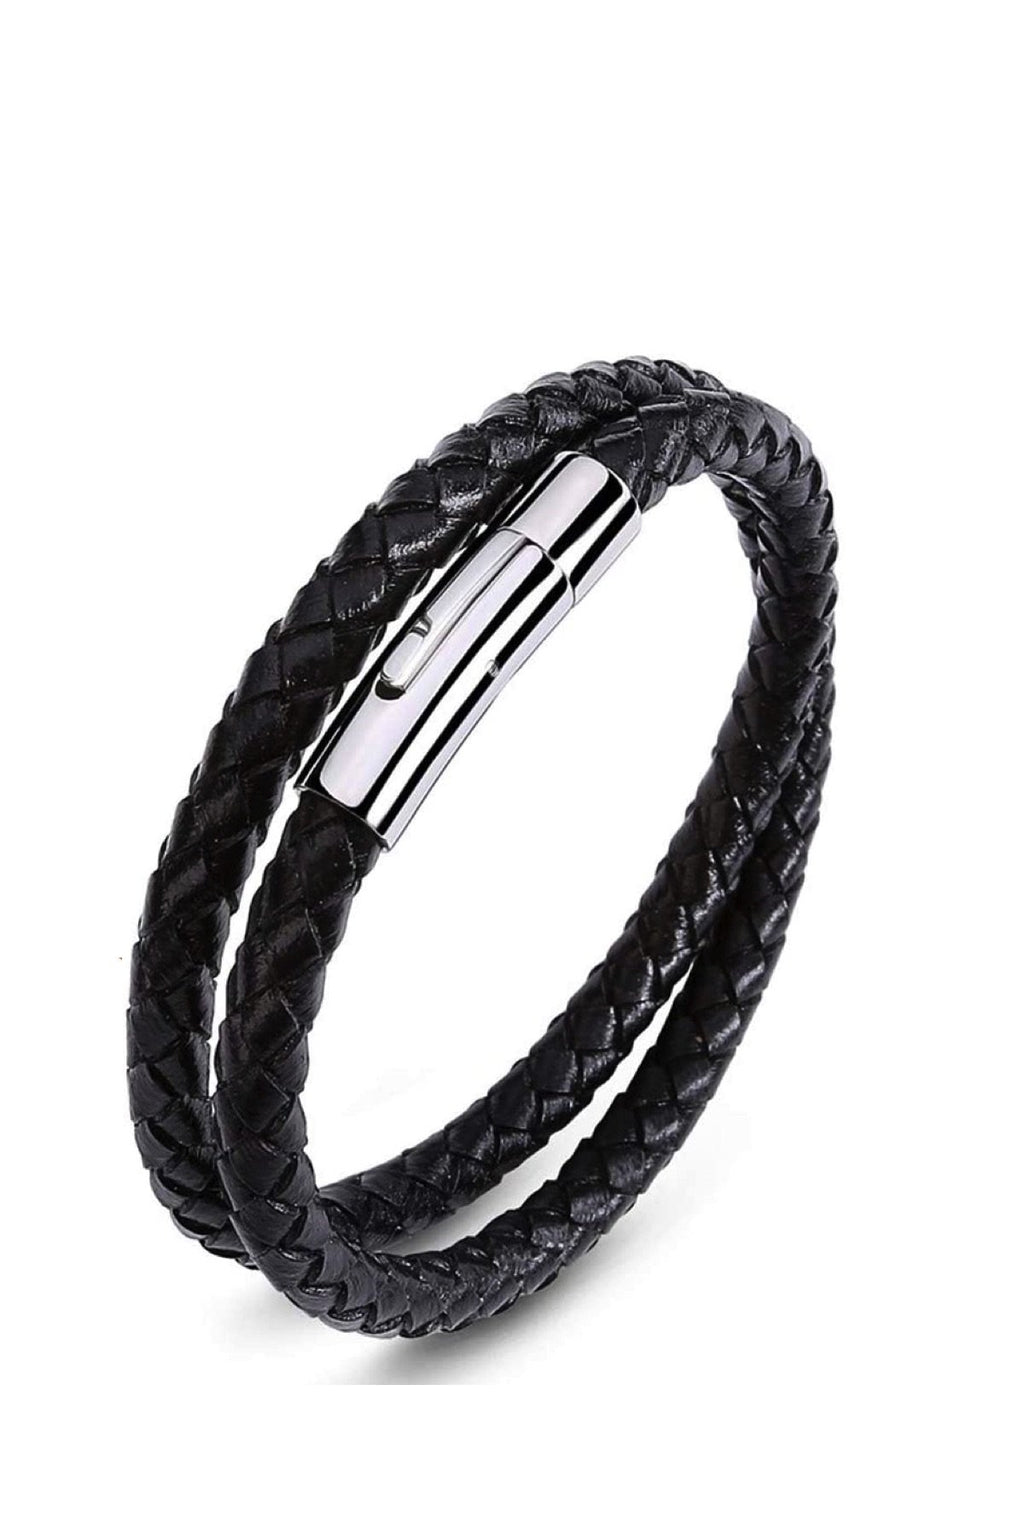 Silver & Black Leather Wrap Bracelet